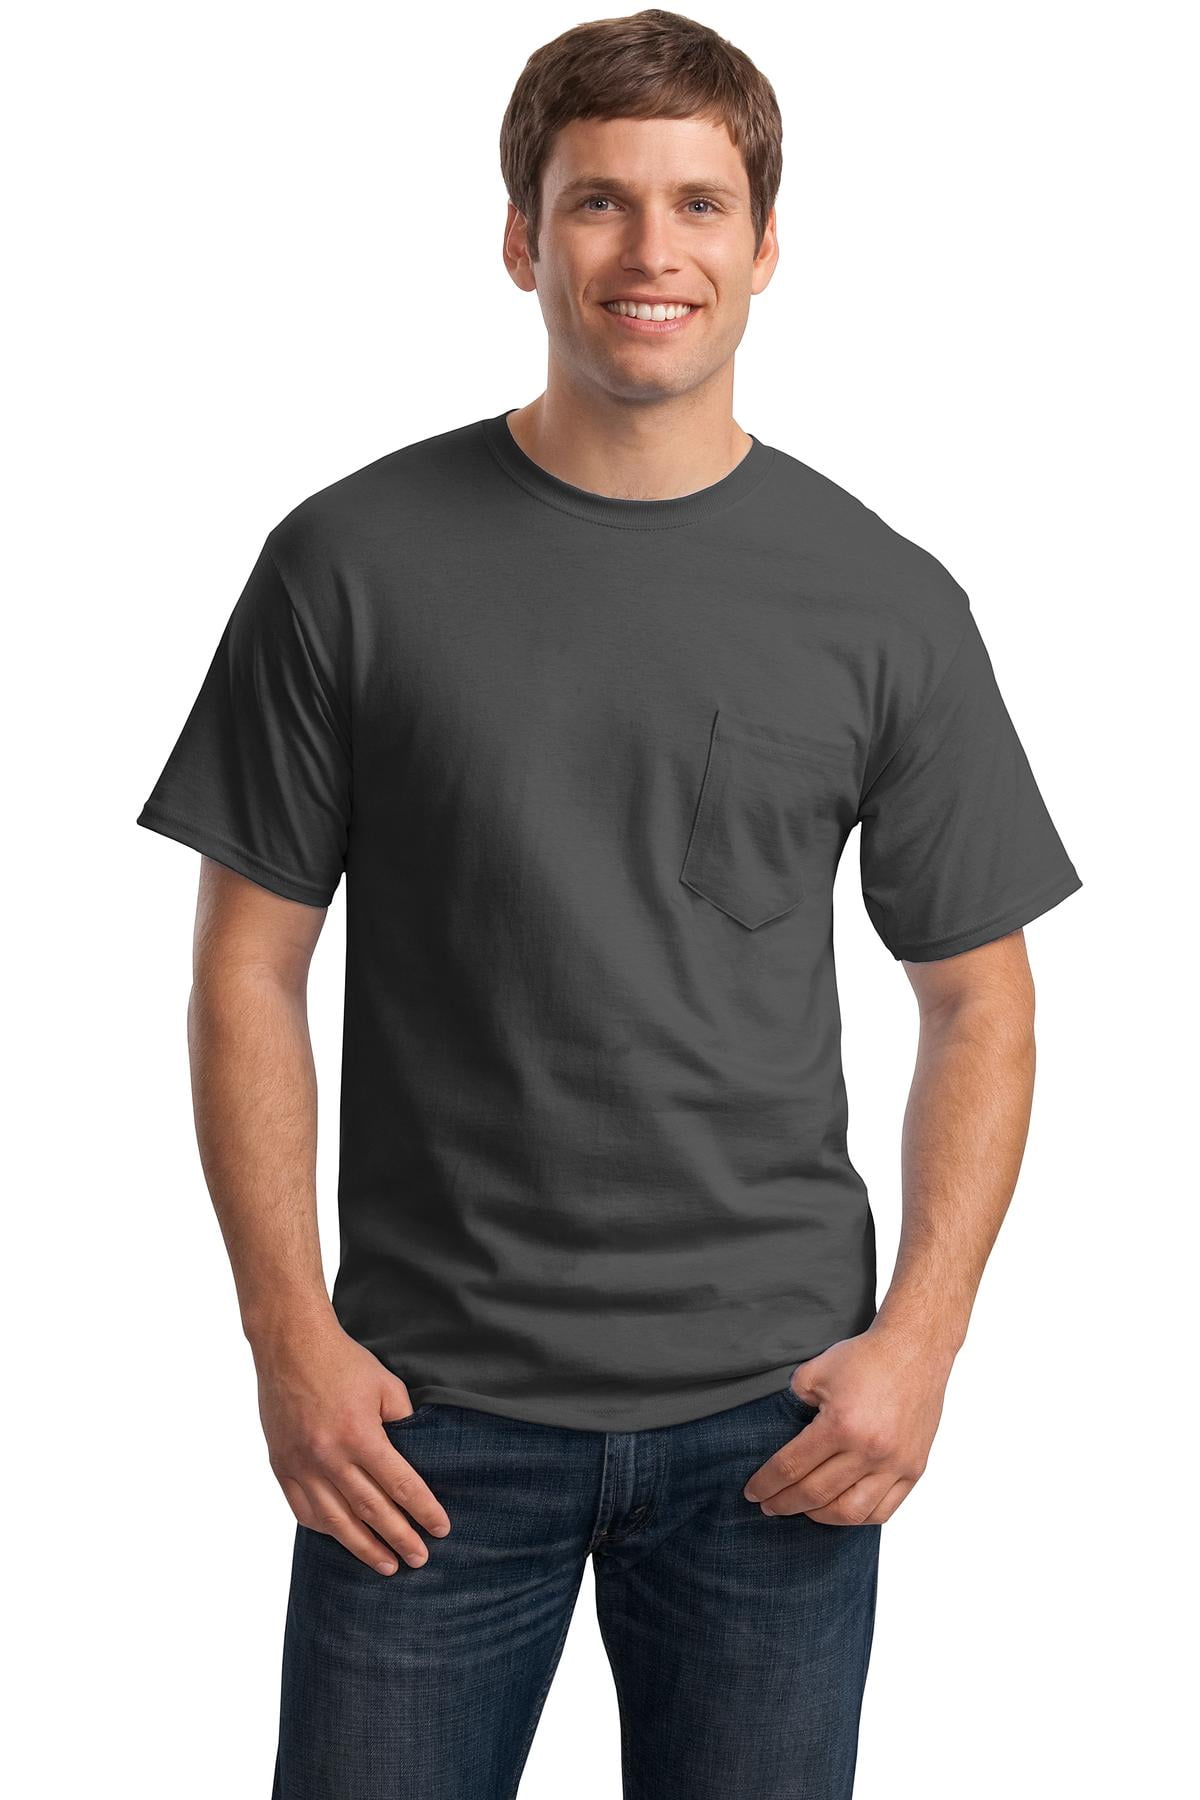 Hanes Men's Short Sleeve Tagless 100% Cotton T-Shirt with Pocket 5590 